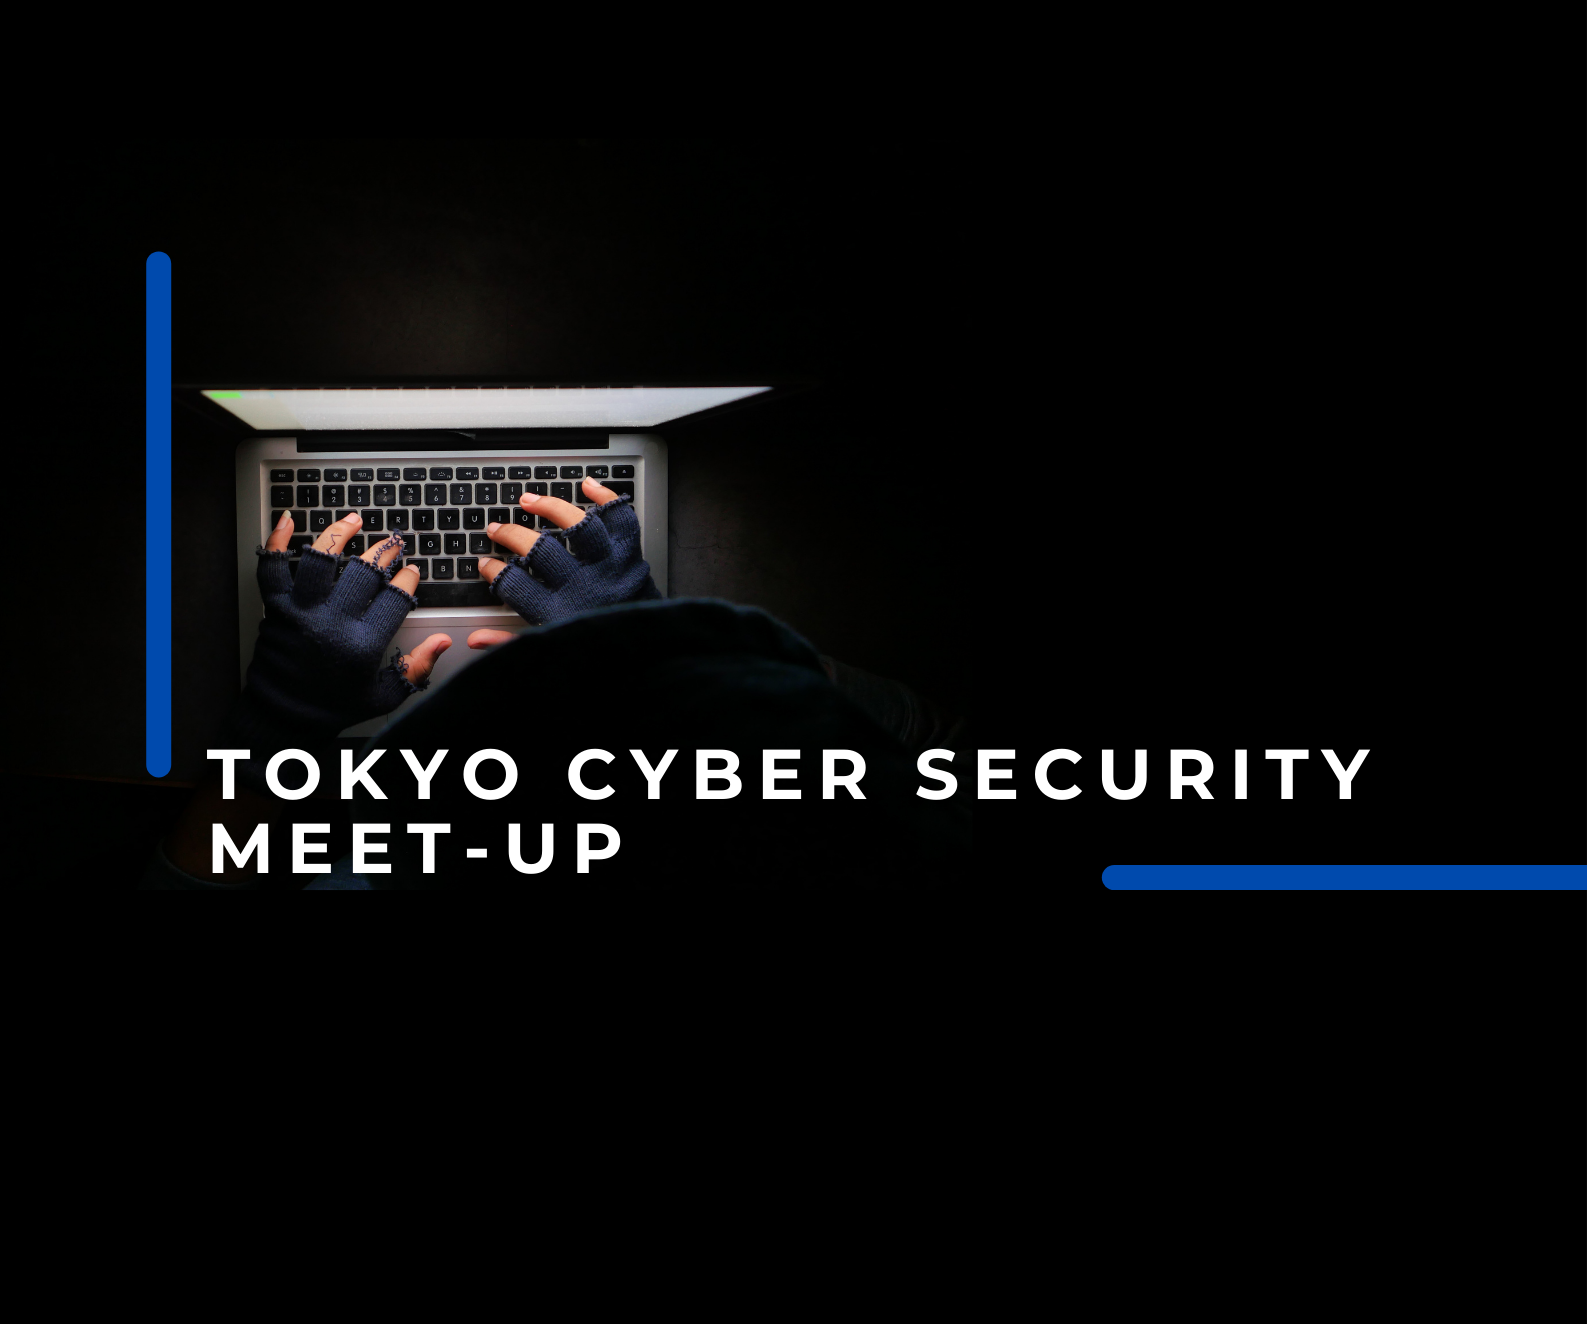 TOKYO CYBER SECURITY MEETUP (photo credit @Tokyo Cyber Security Meetup)